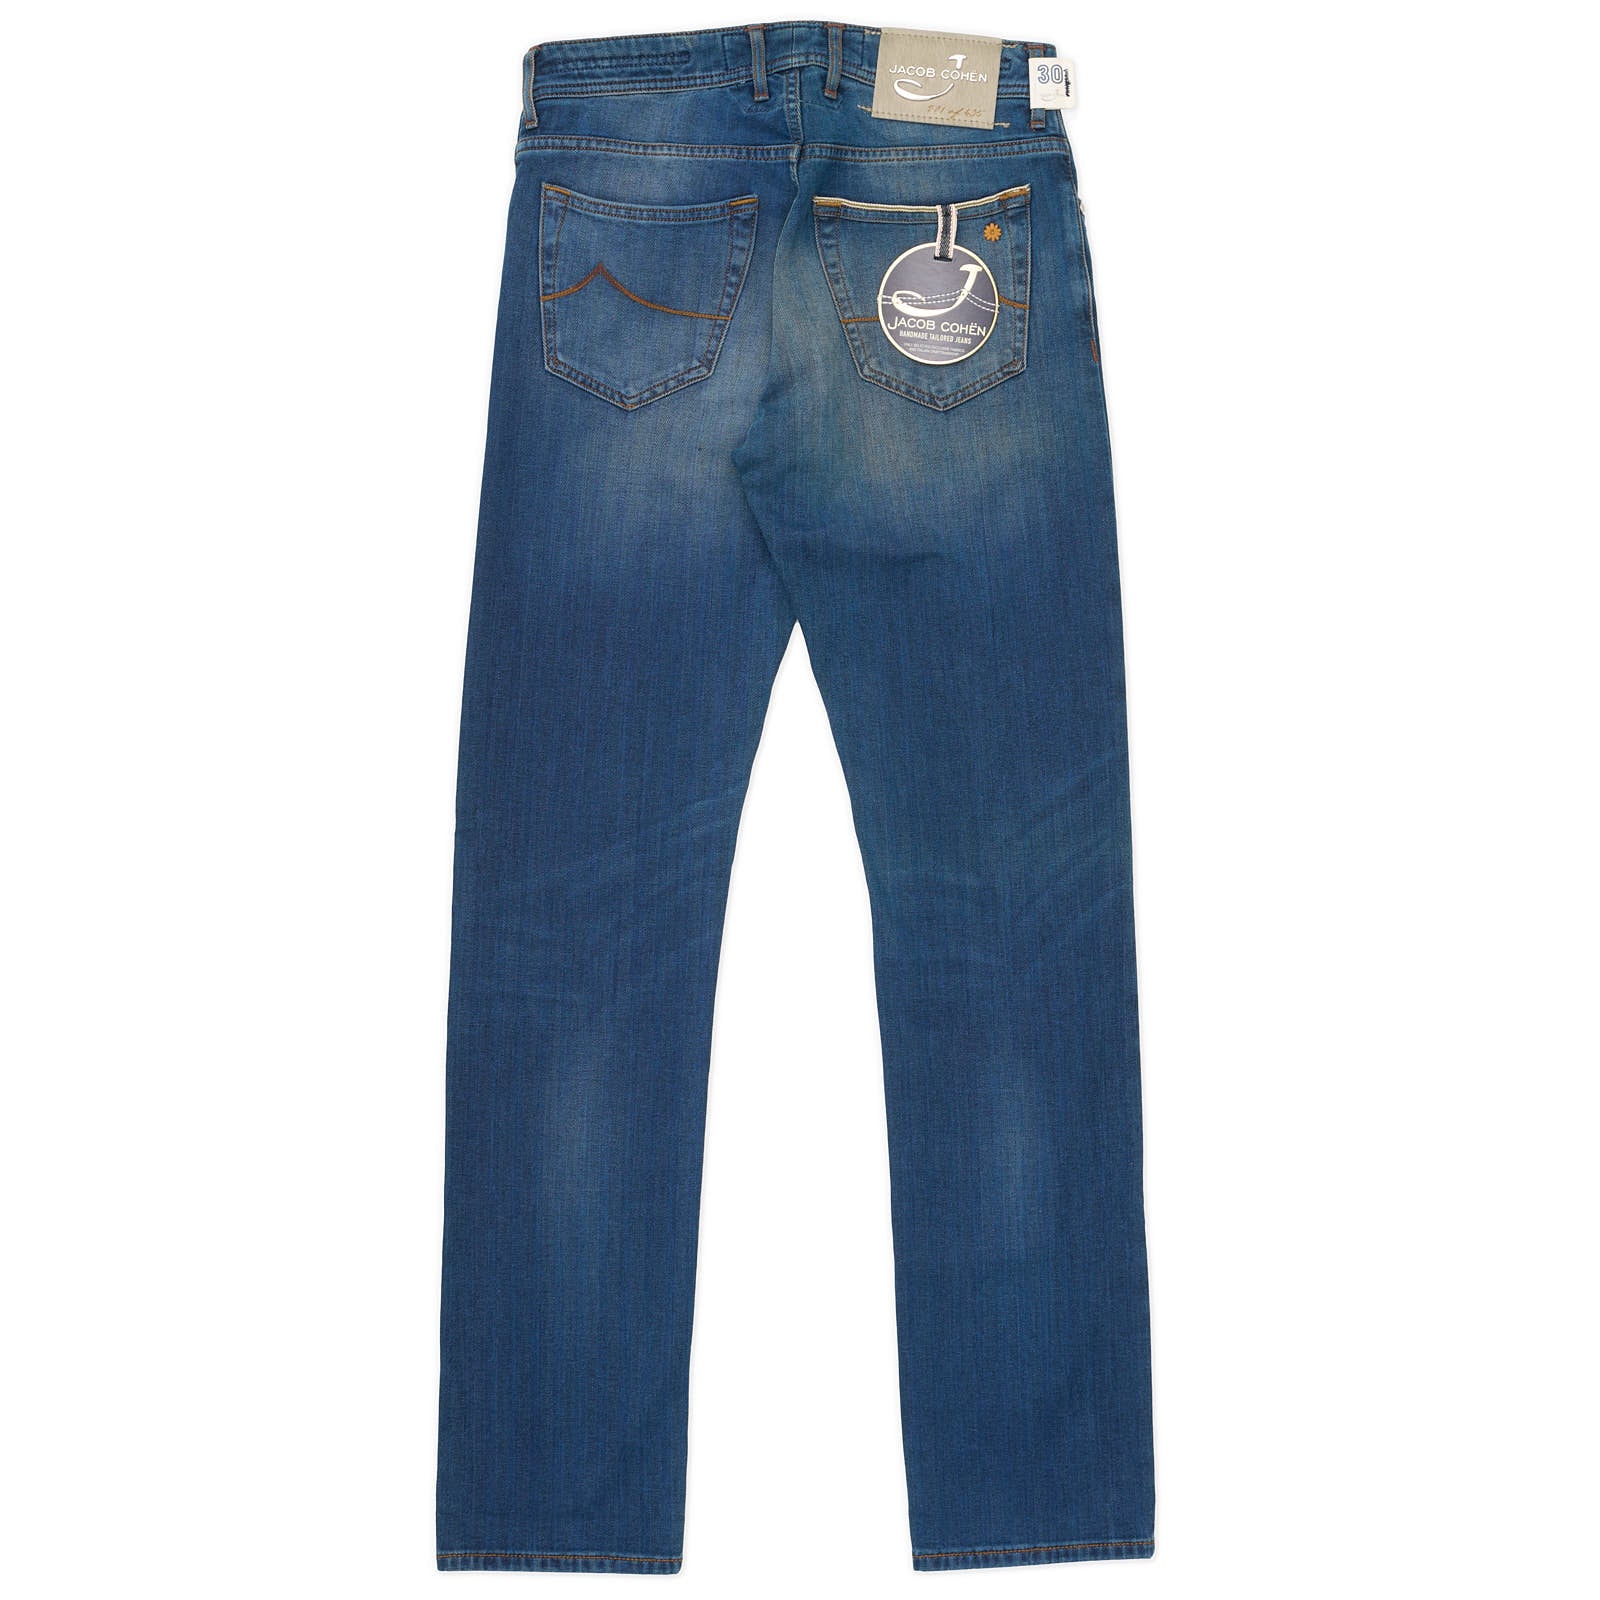 JACOB COHEN Handmade Limited Ed. of 495 Blue Herringbone Denim Jeans NEW US 30